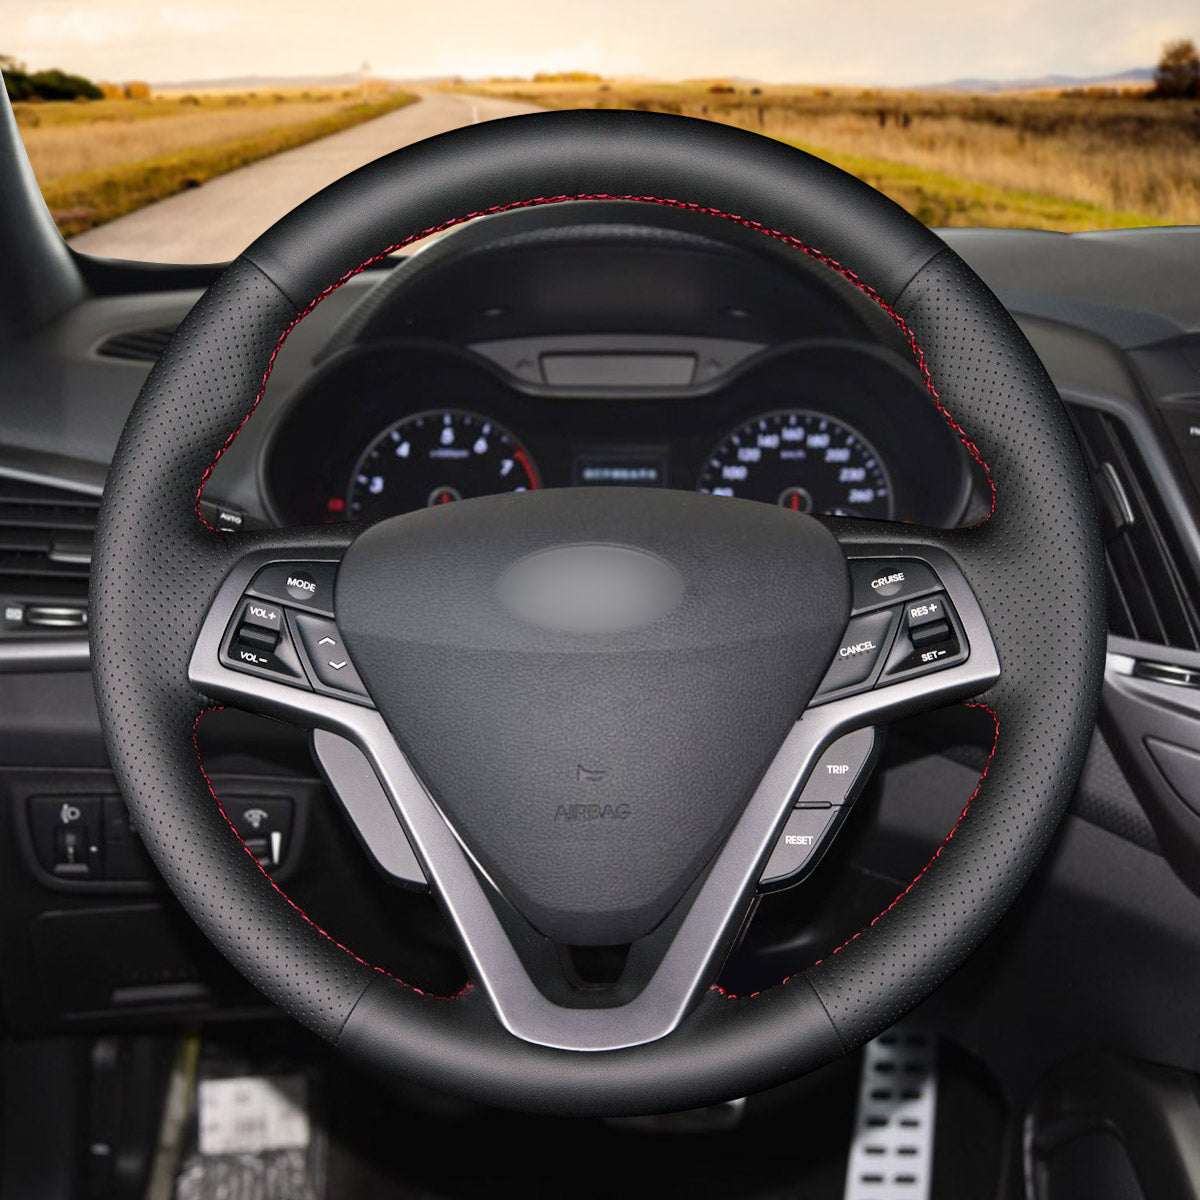 Car Steering Wheel Cover for Hyundai Veloster 2011-2017